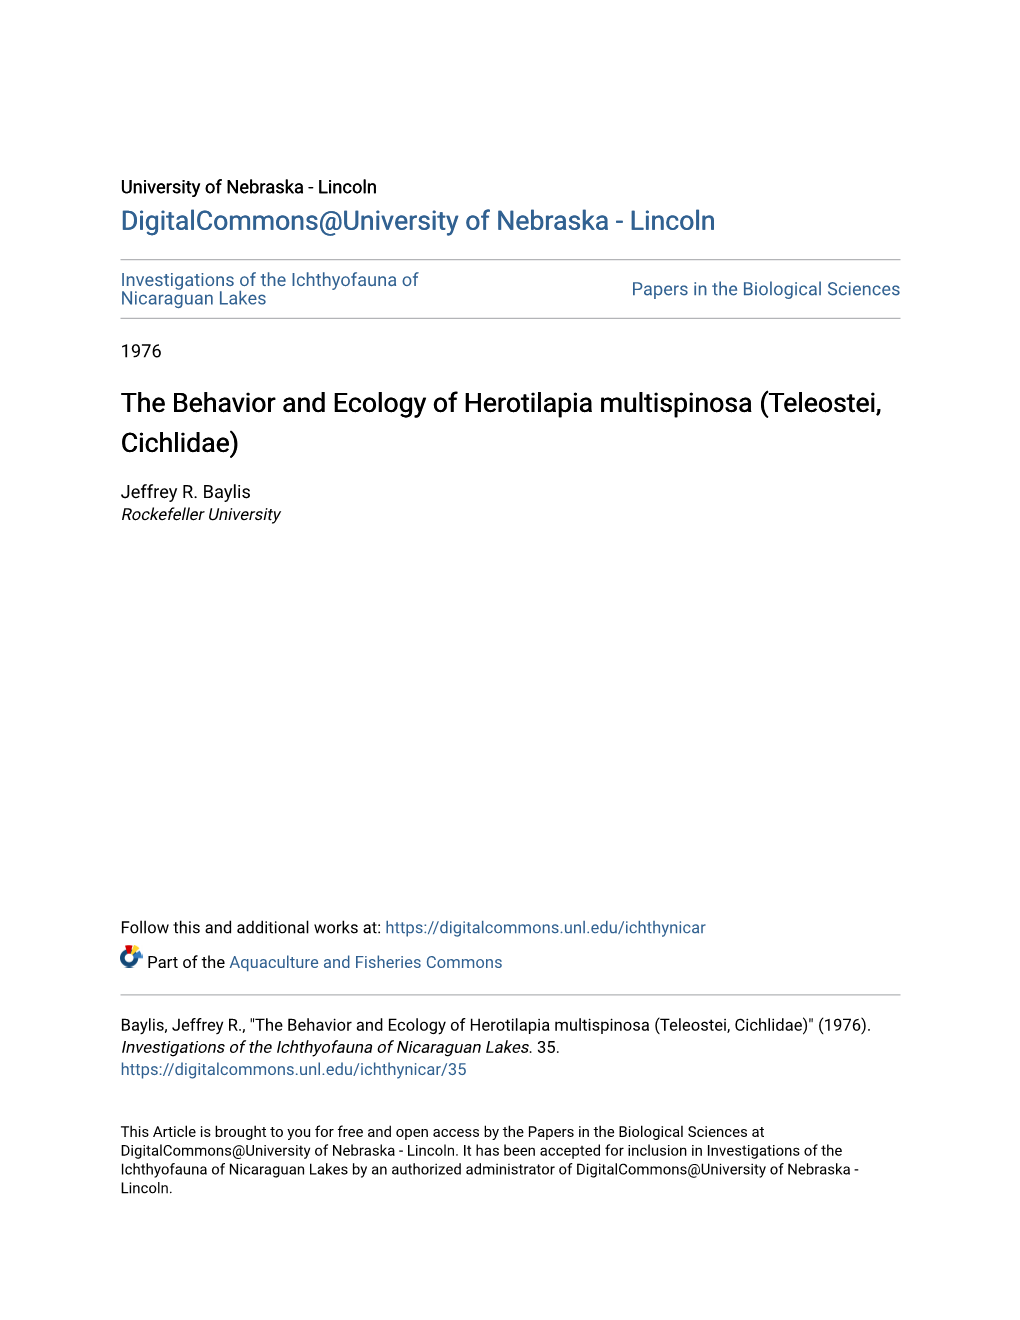 The Behavior and Ecology of Herotilapia Multispinosa (Teleostei, Cichlidae)